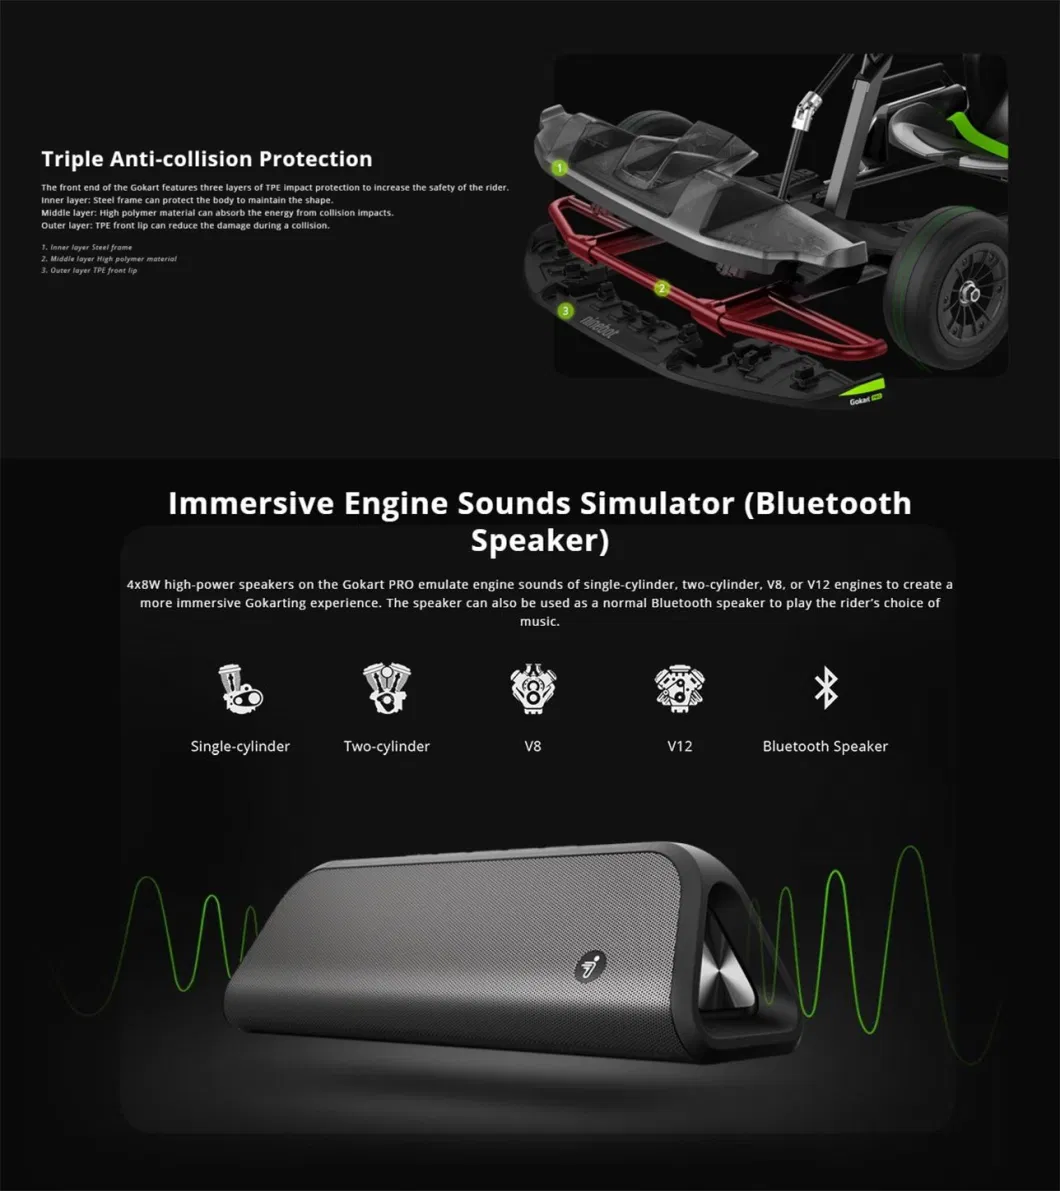 Ninebot Gokart PRO Lamborghini Electric Racing Go Kart High Speed 40km/H Wholesale New Design Adult Electric Go Kart